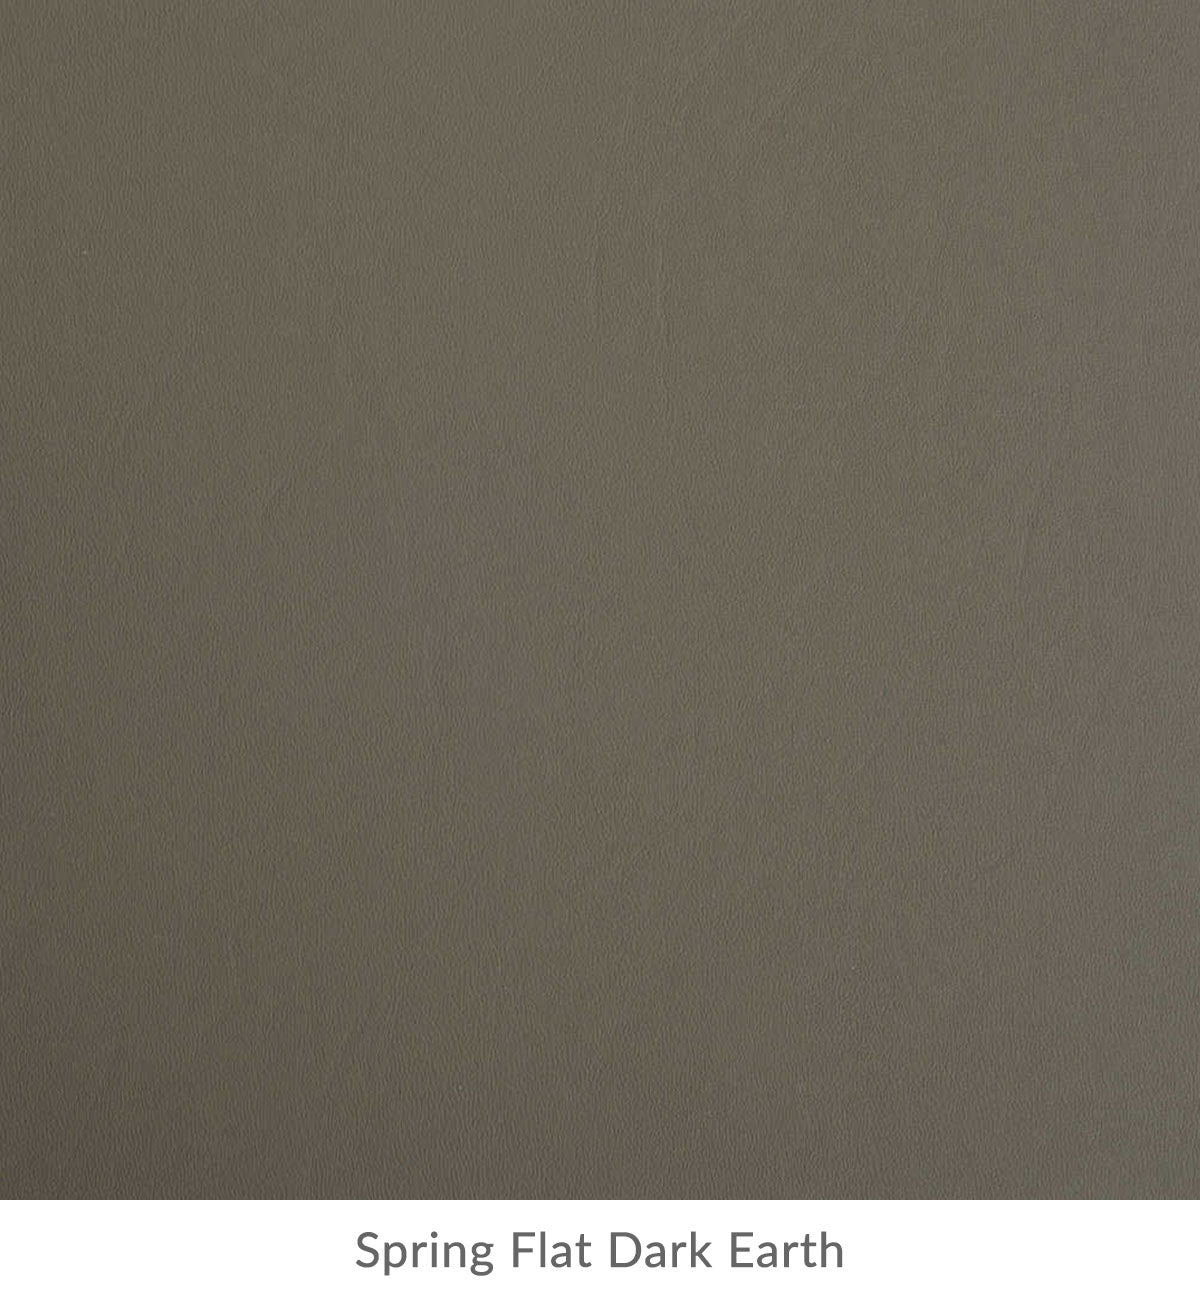 Spring Flat Dark Earth